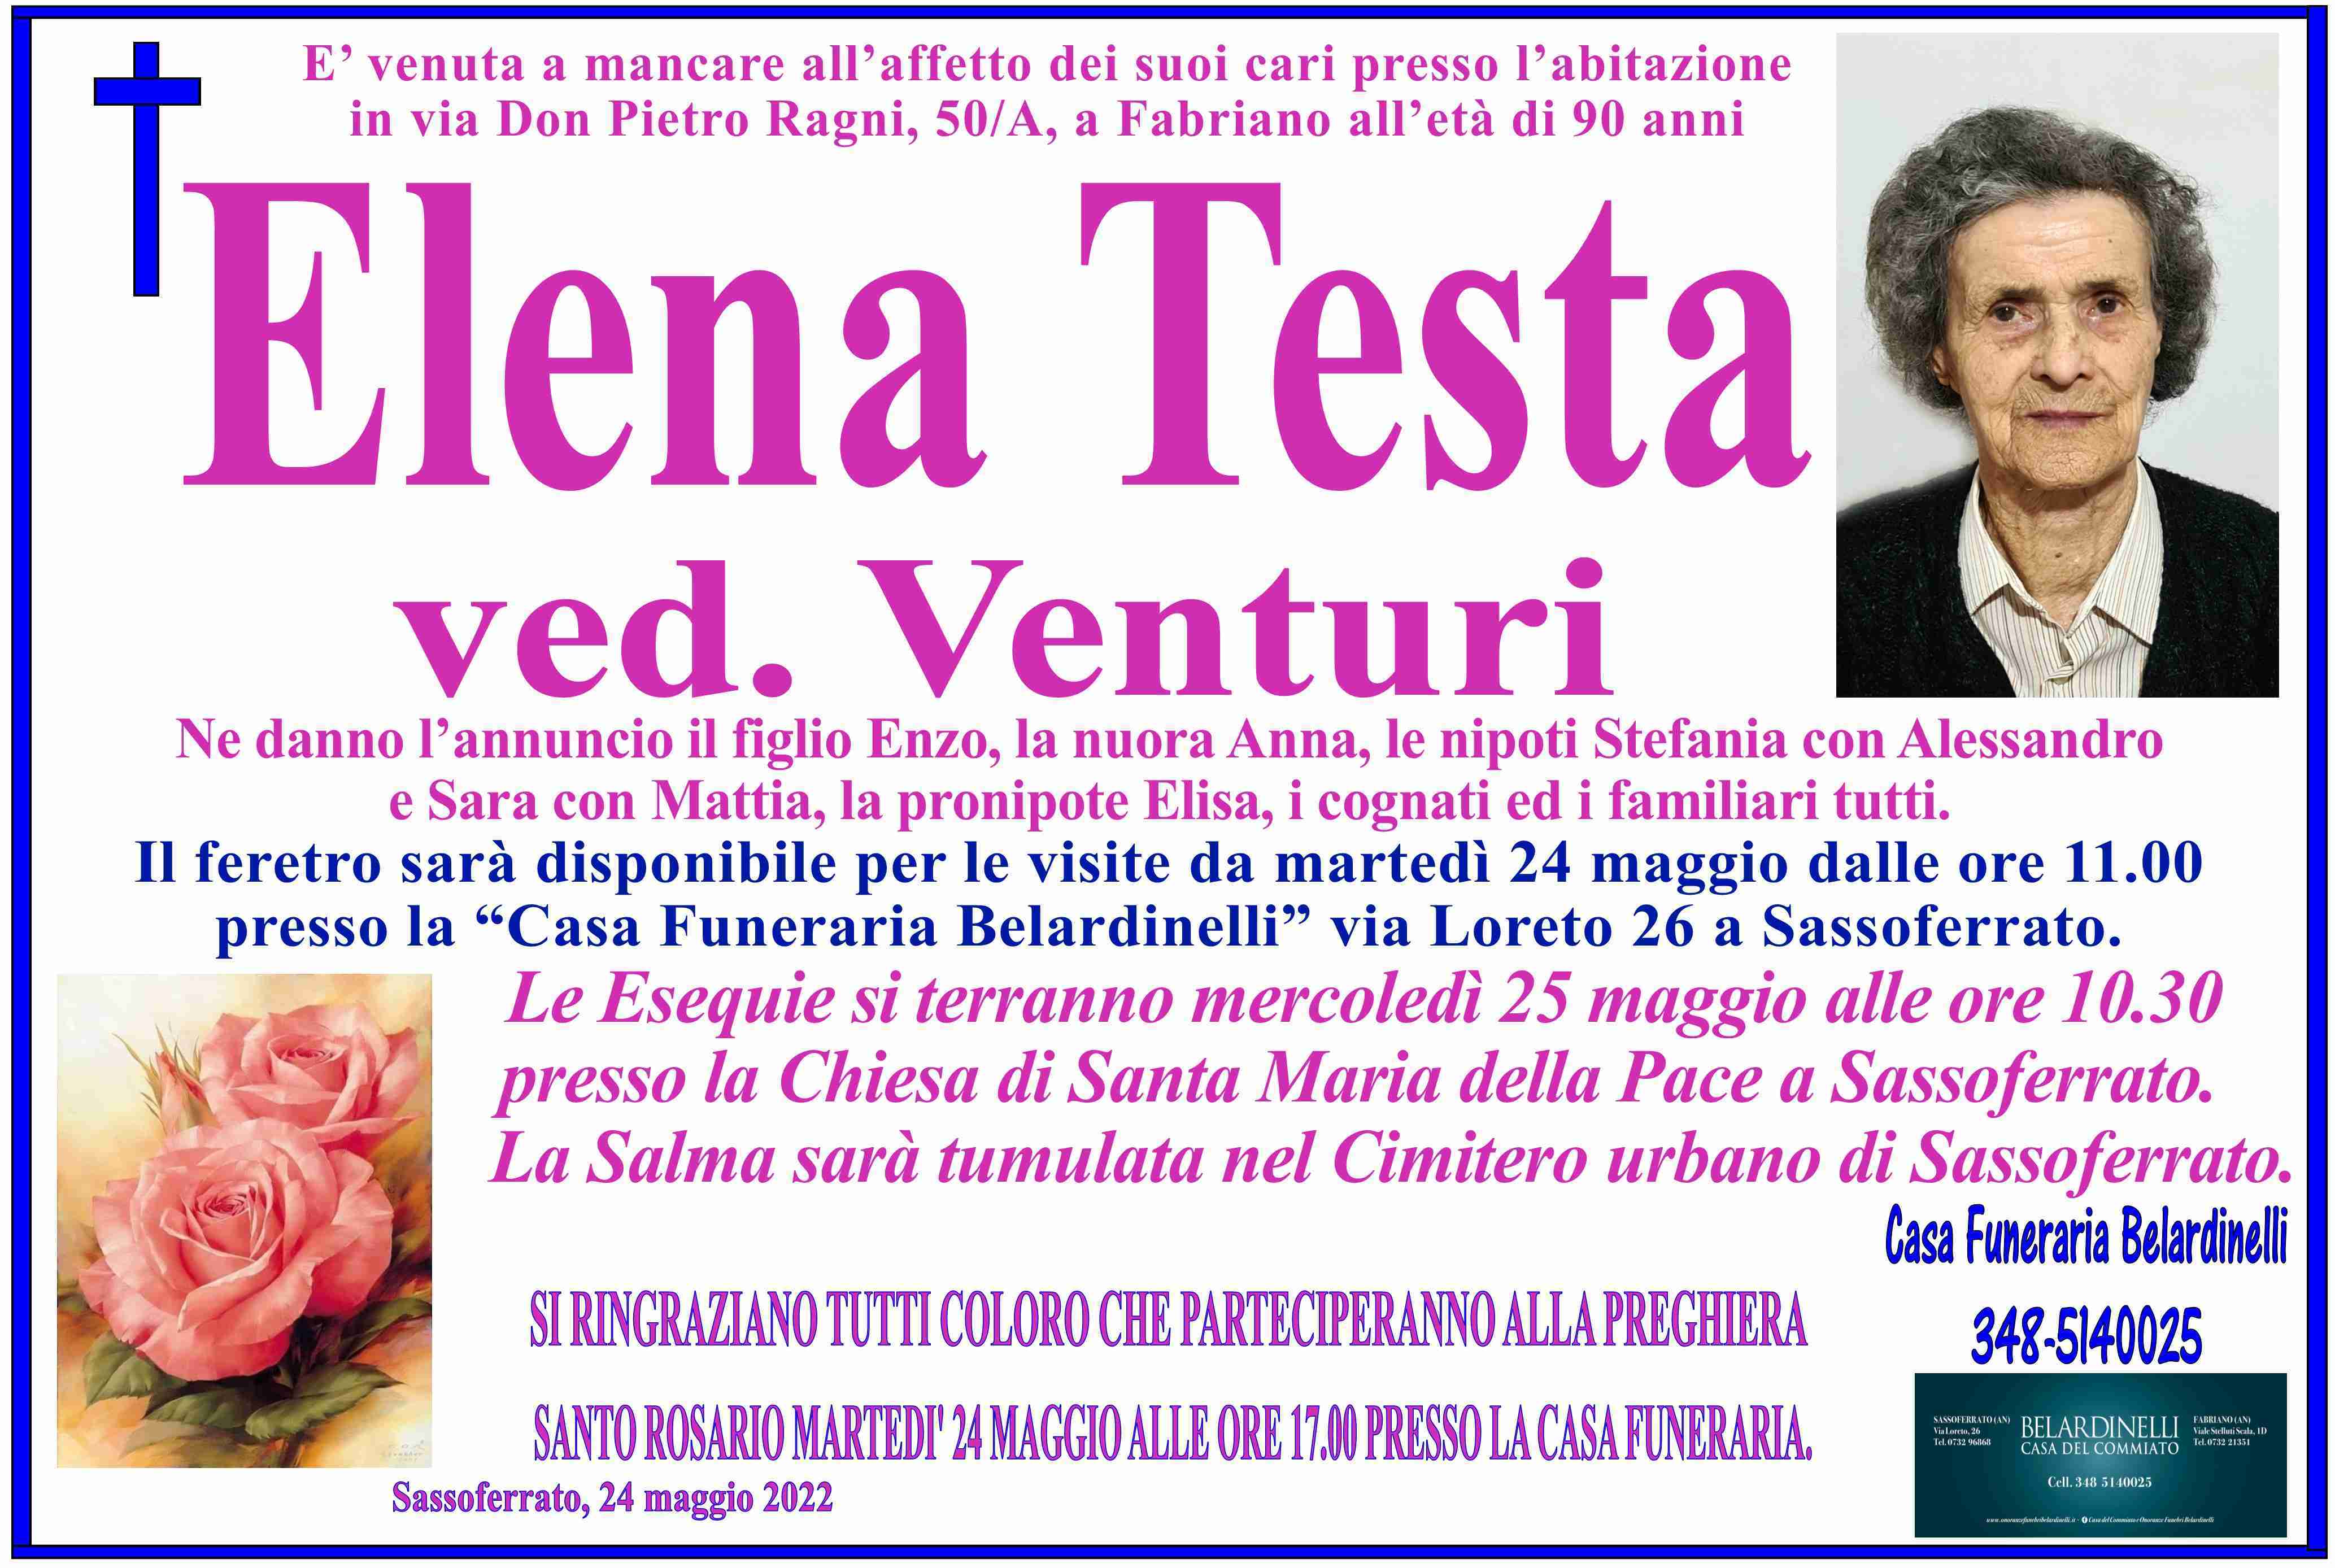 Elena Testa